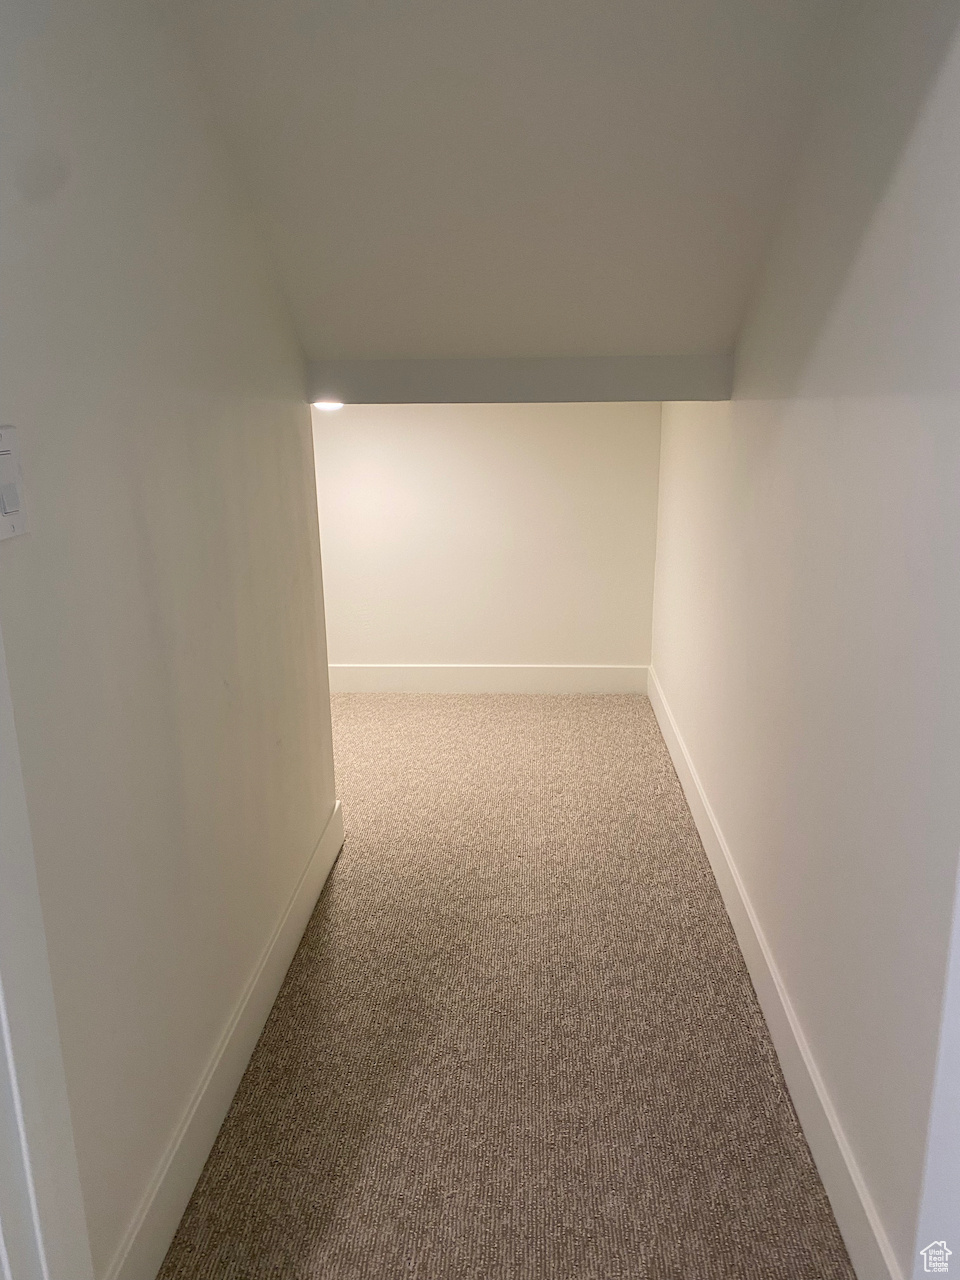 Hallway featuring light colored carpet